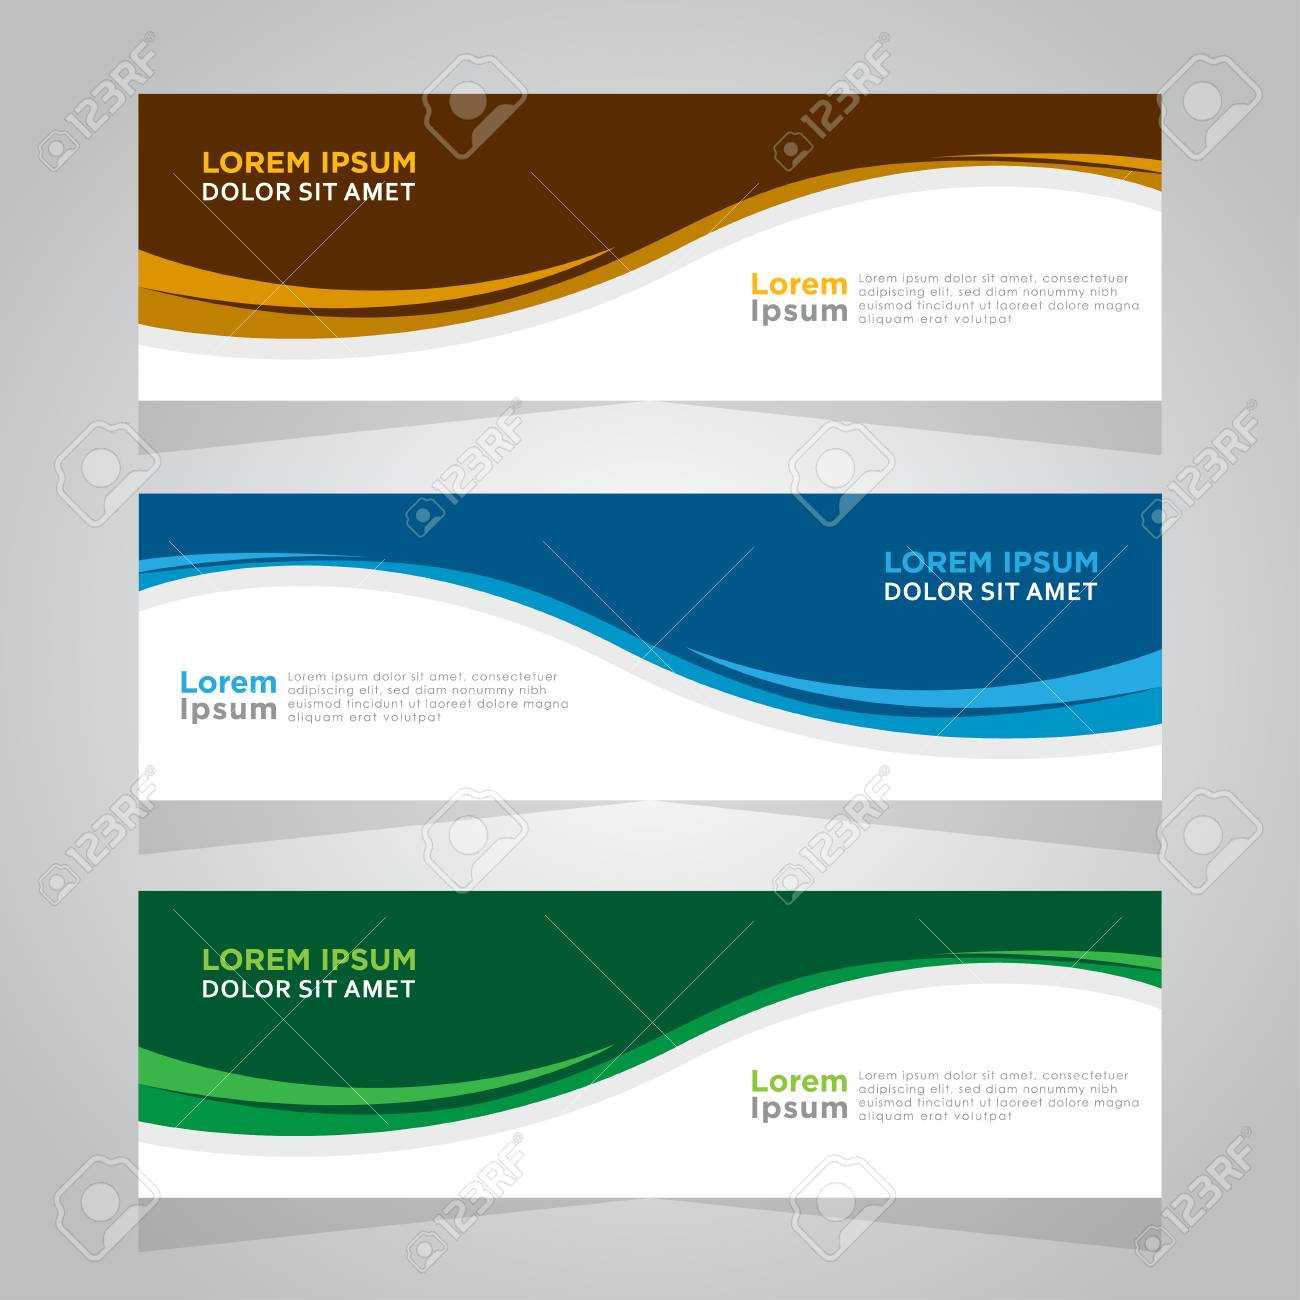 Vector Abstract Design Web Banner Template. Web Design Elements.. With Website Banner Design Templates